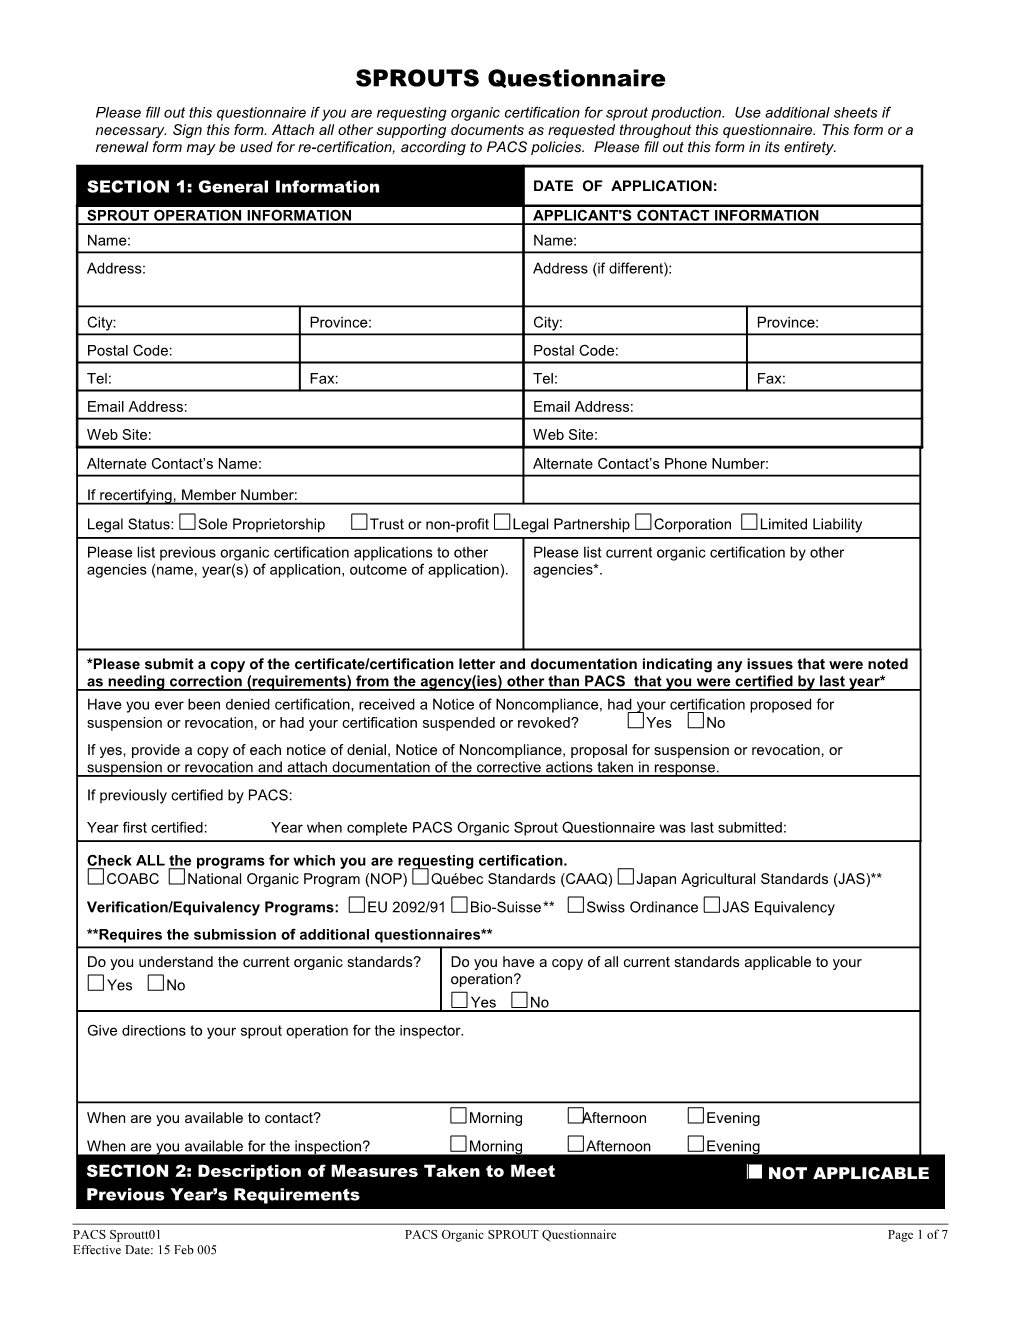 IC-F-042 OCIA Organic Apiary Questionnaire s1